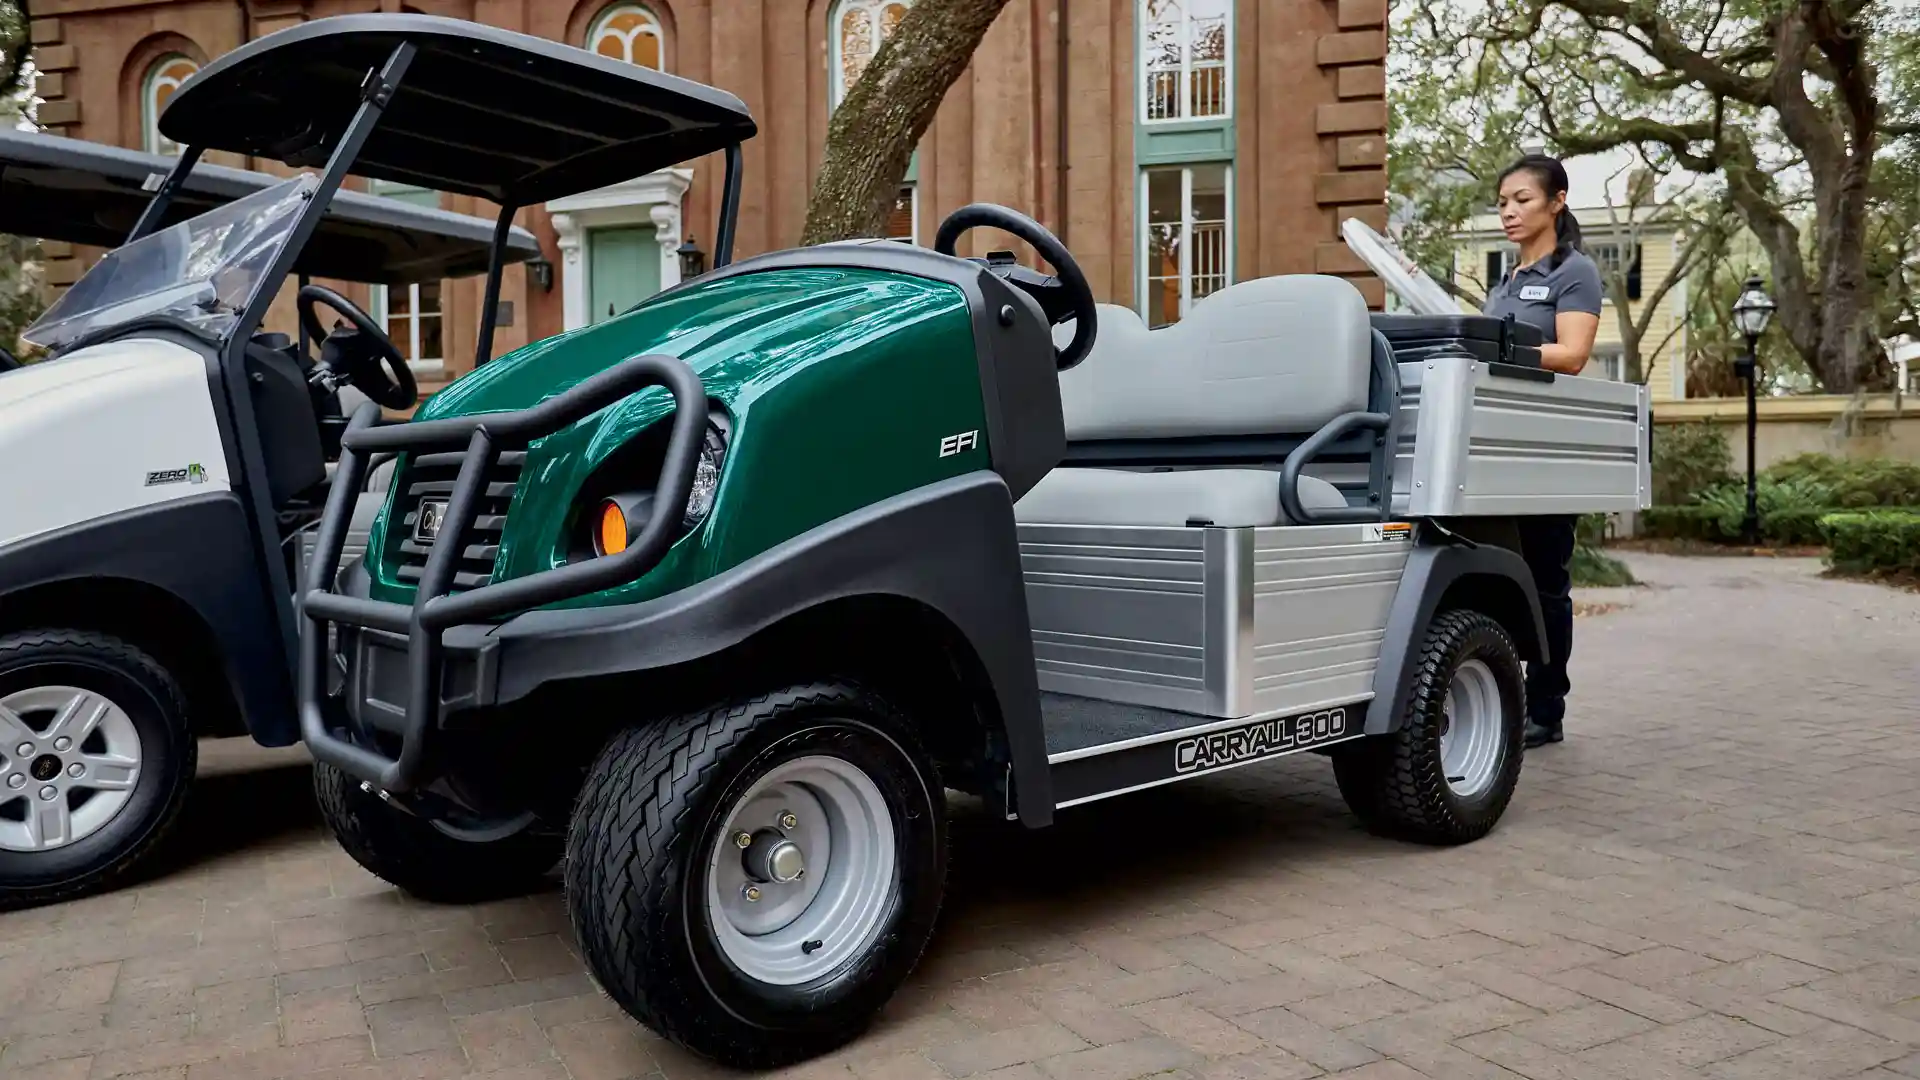 Carryall 300 utility vehicle for university facilities maintenance